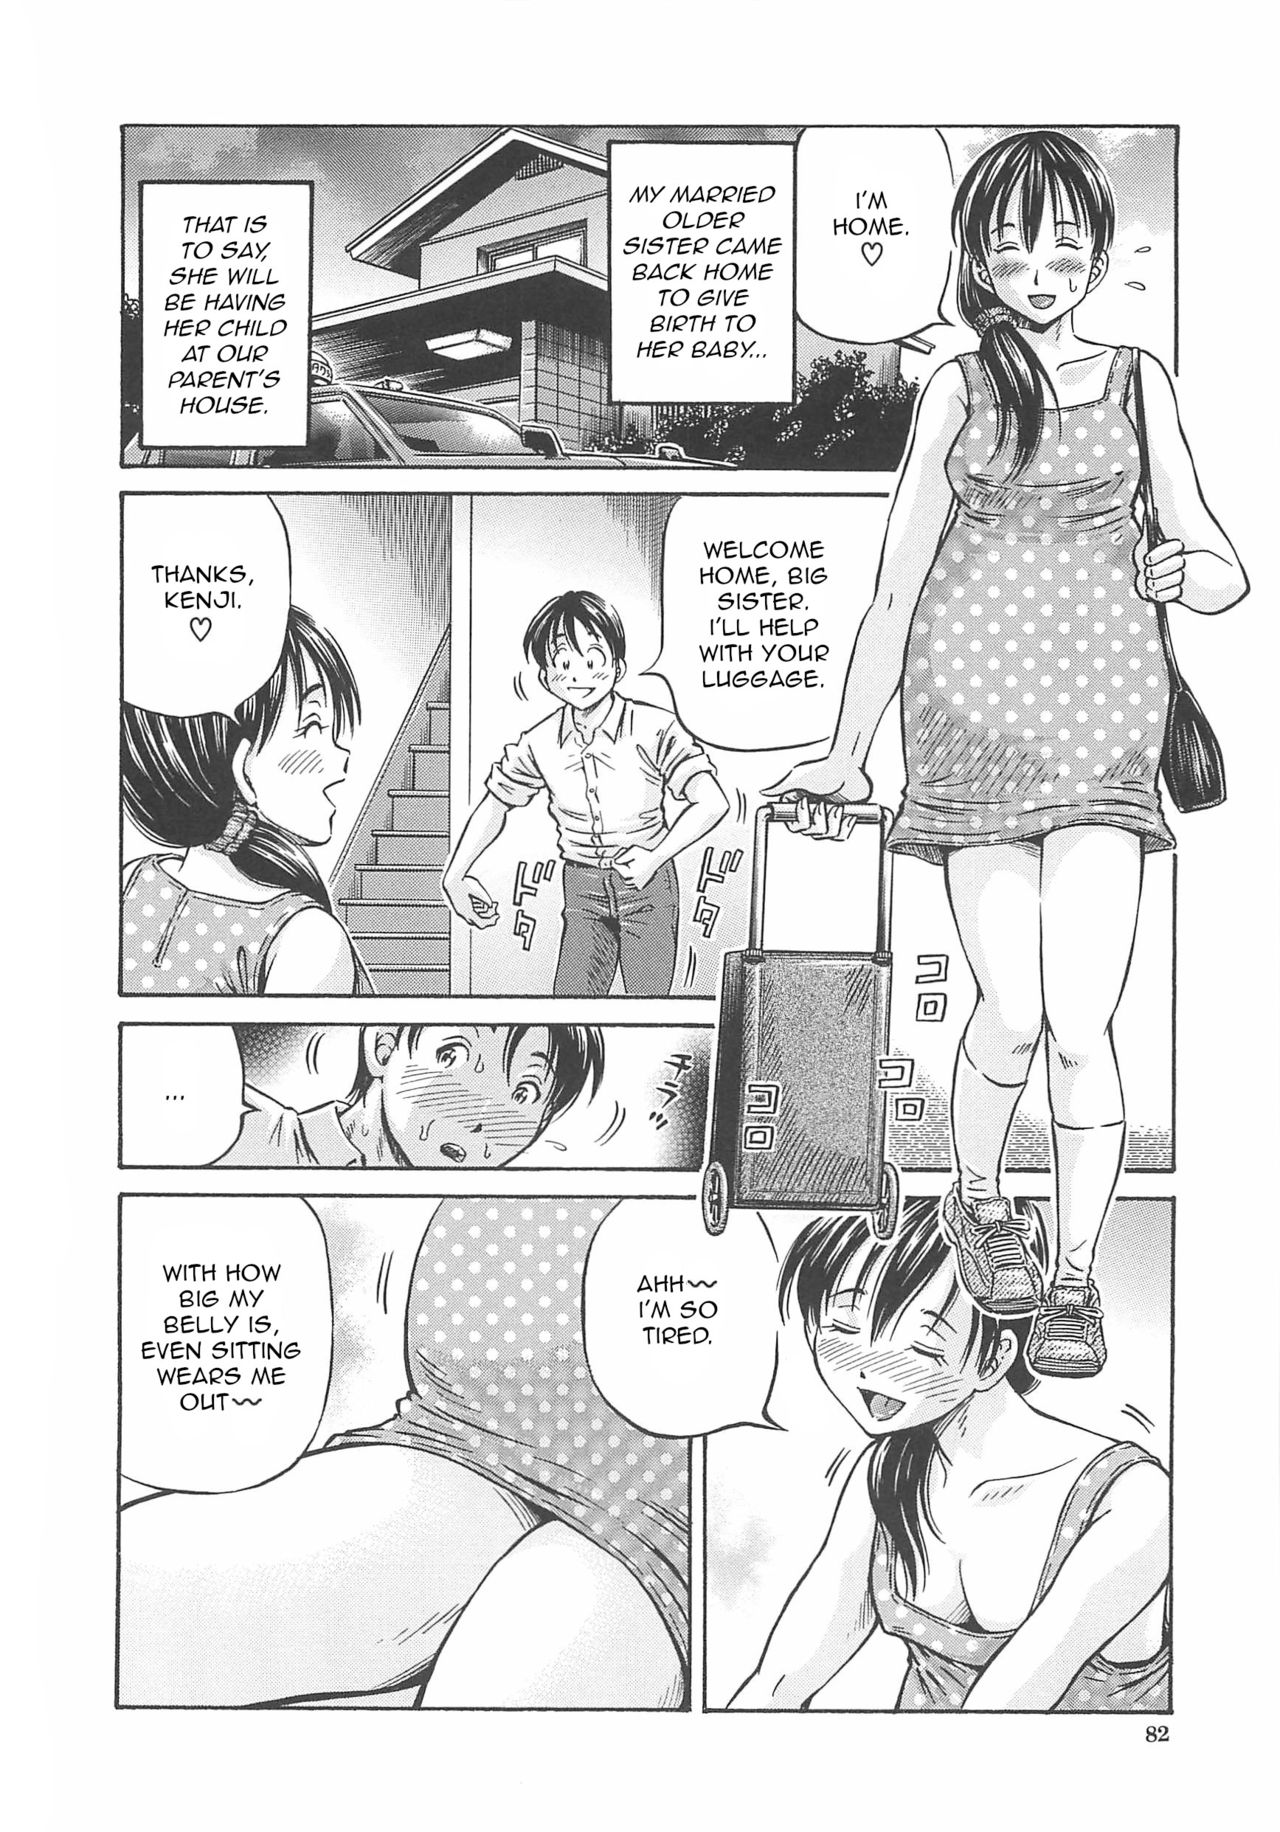 Pregnancy smut manga